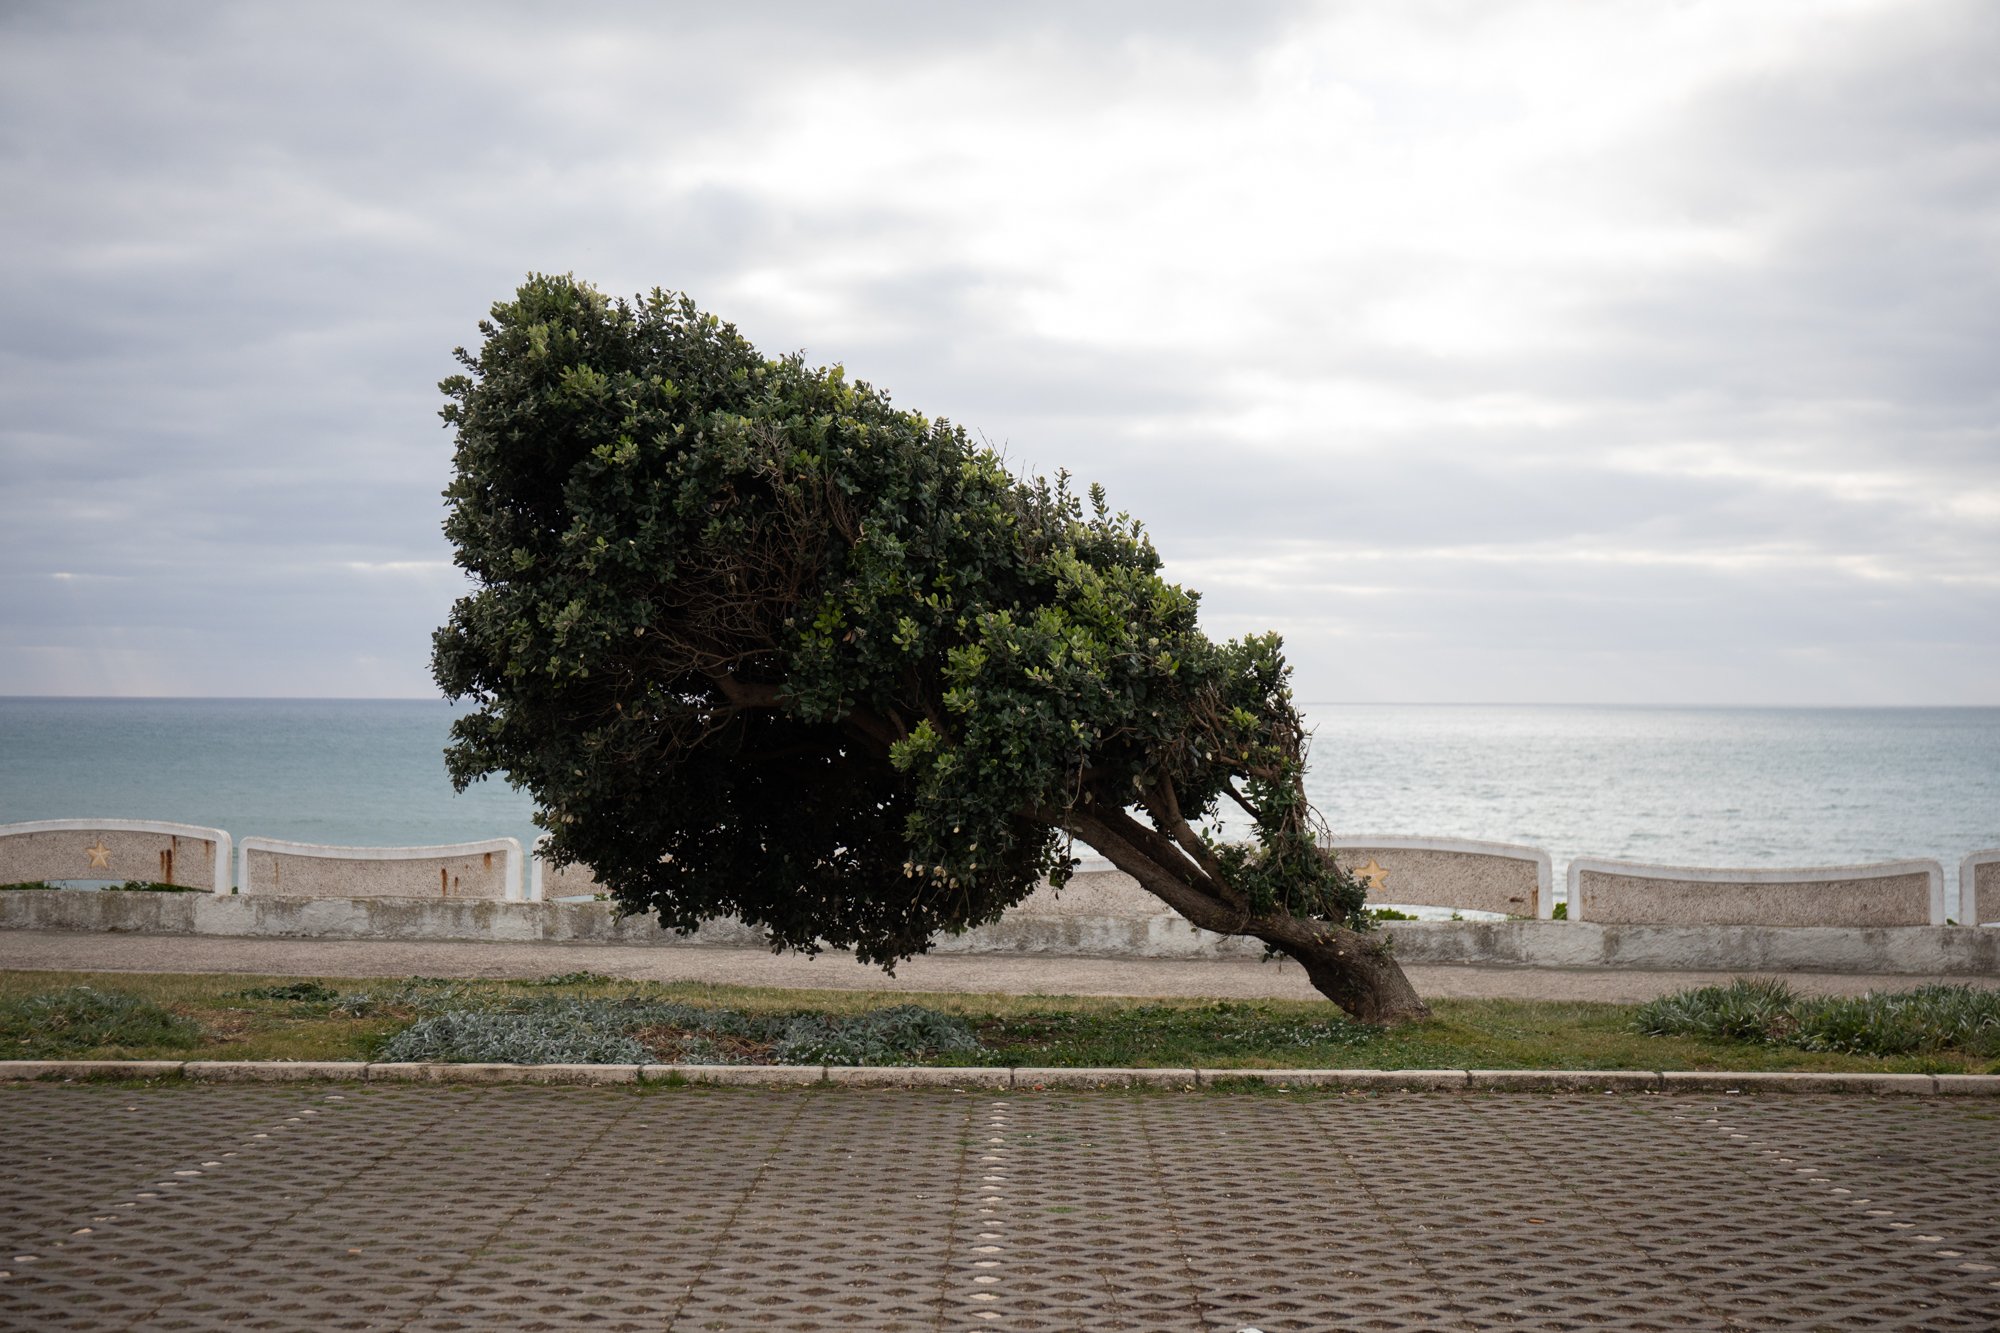  Trees living alongside the Atlantic wind, Ericeira, Portugal.   